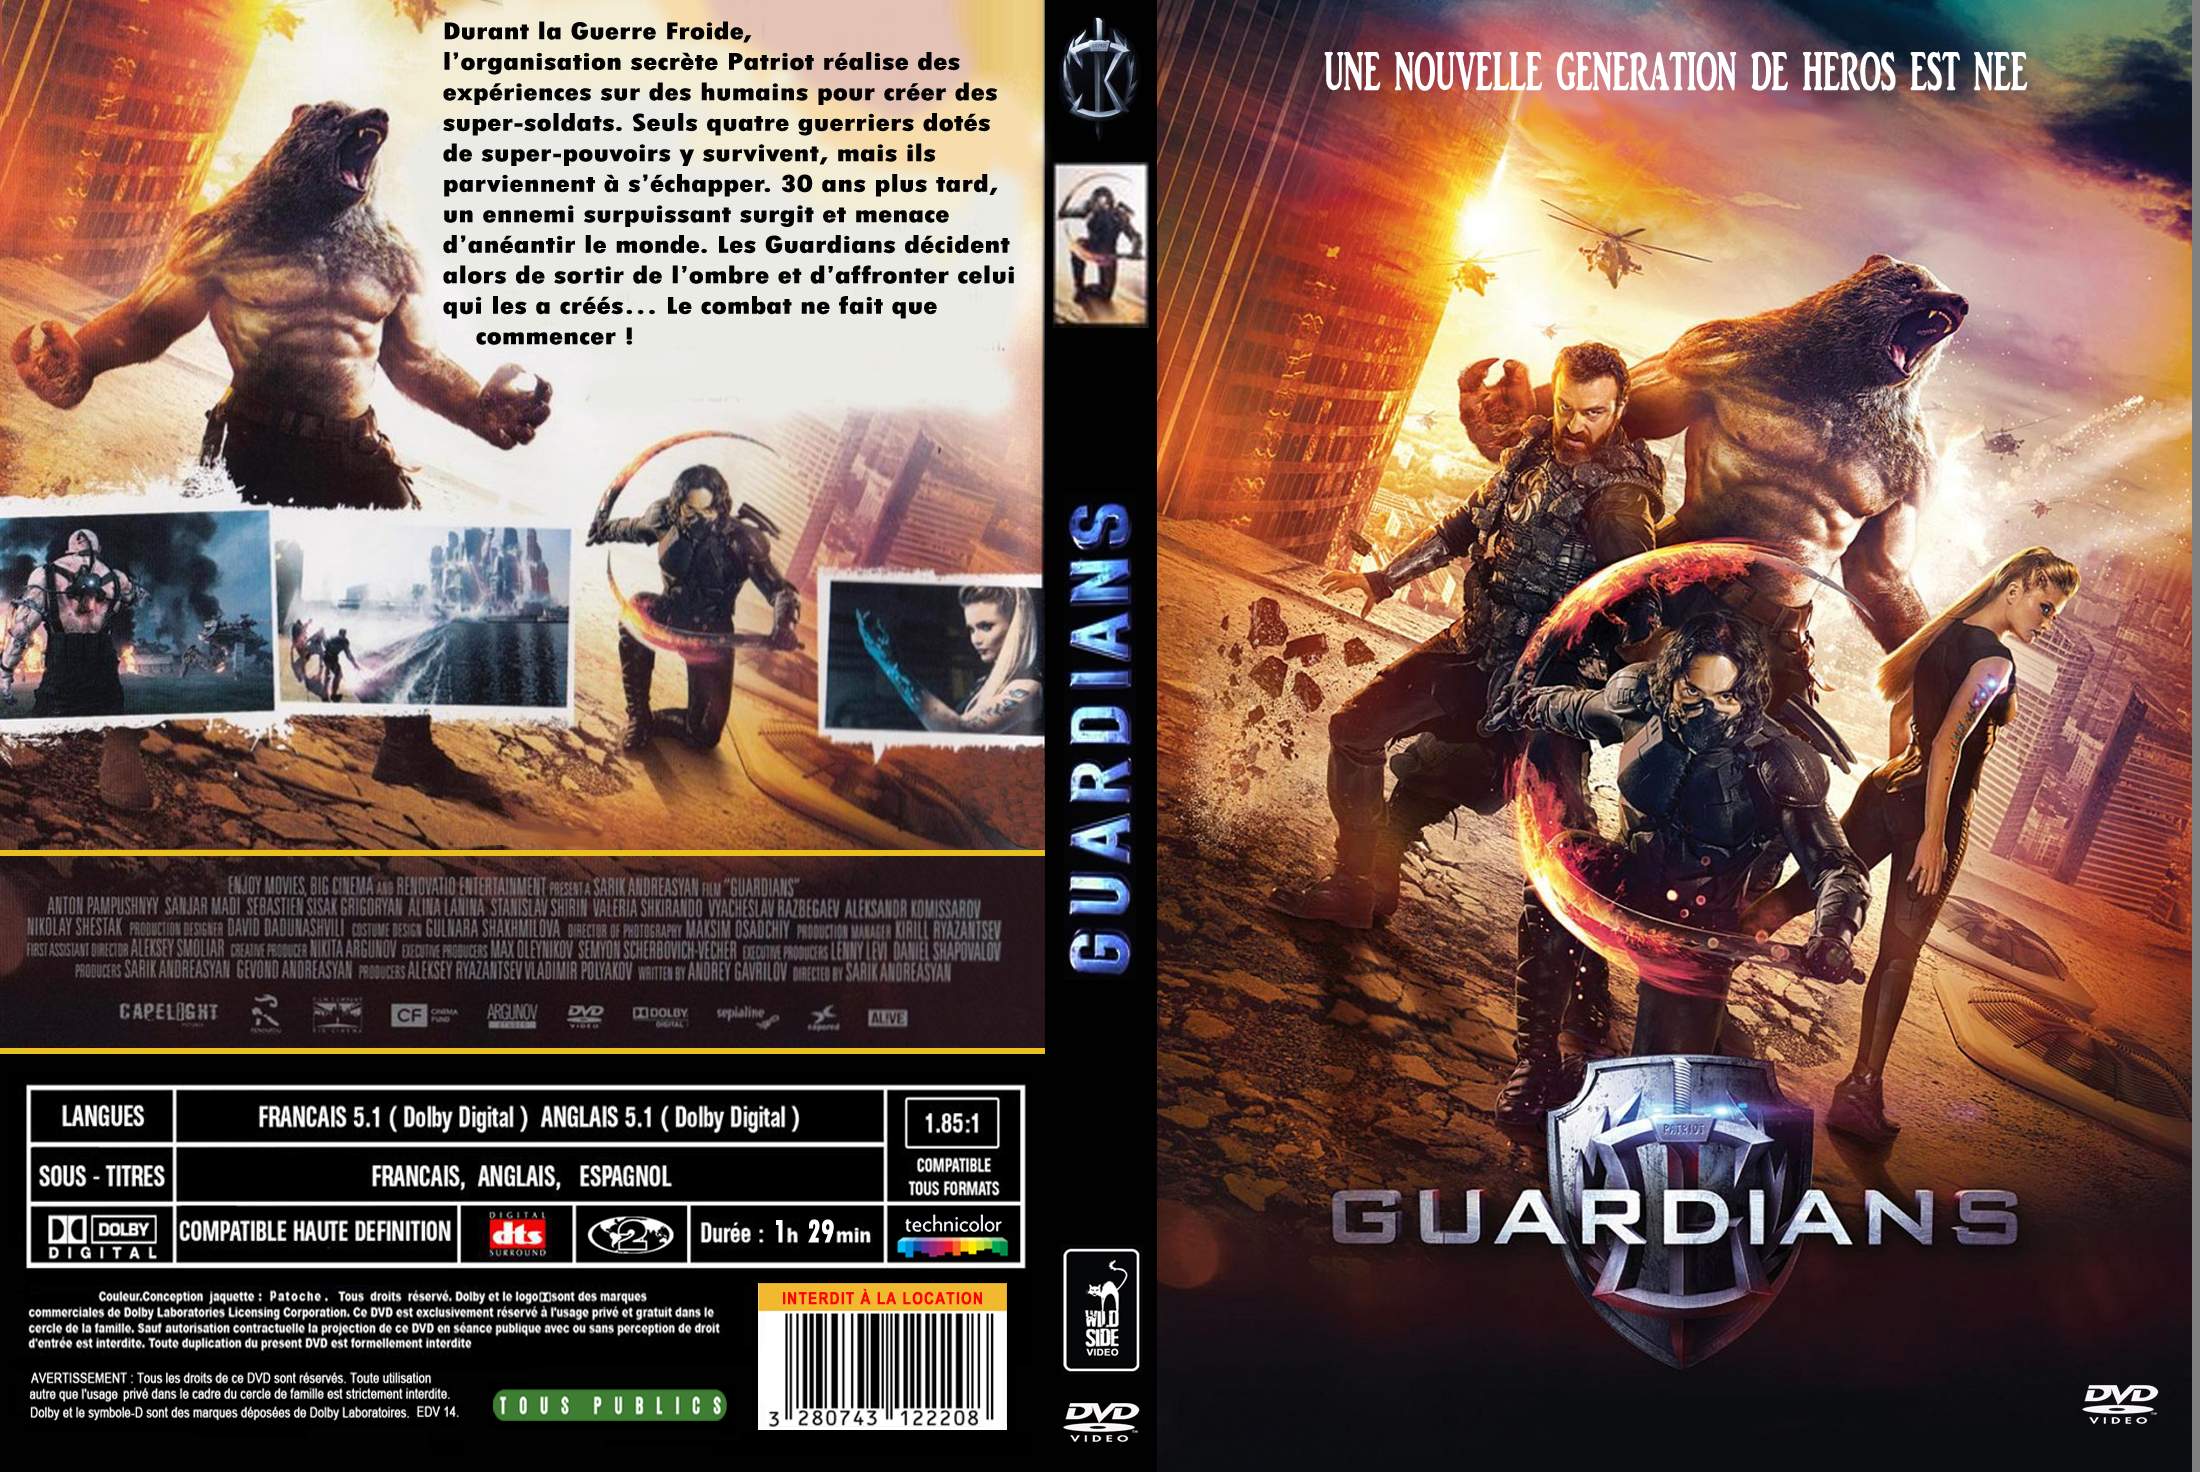 Jaquette DVD Guardians custom